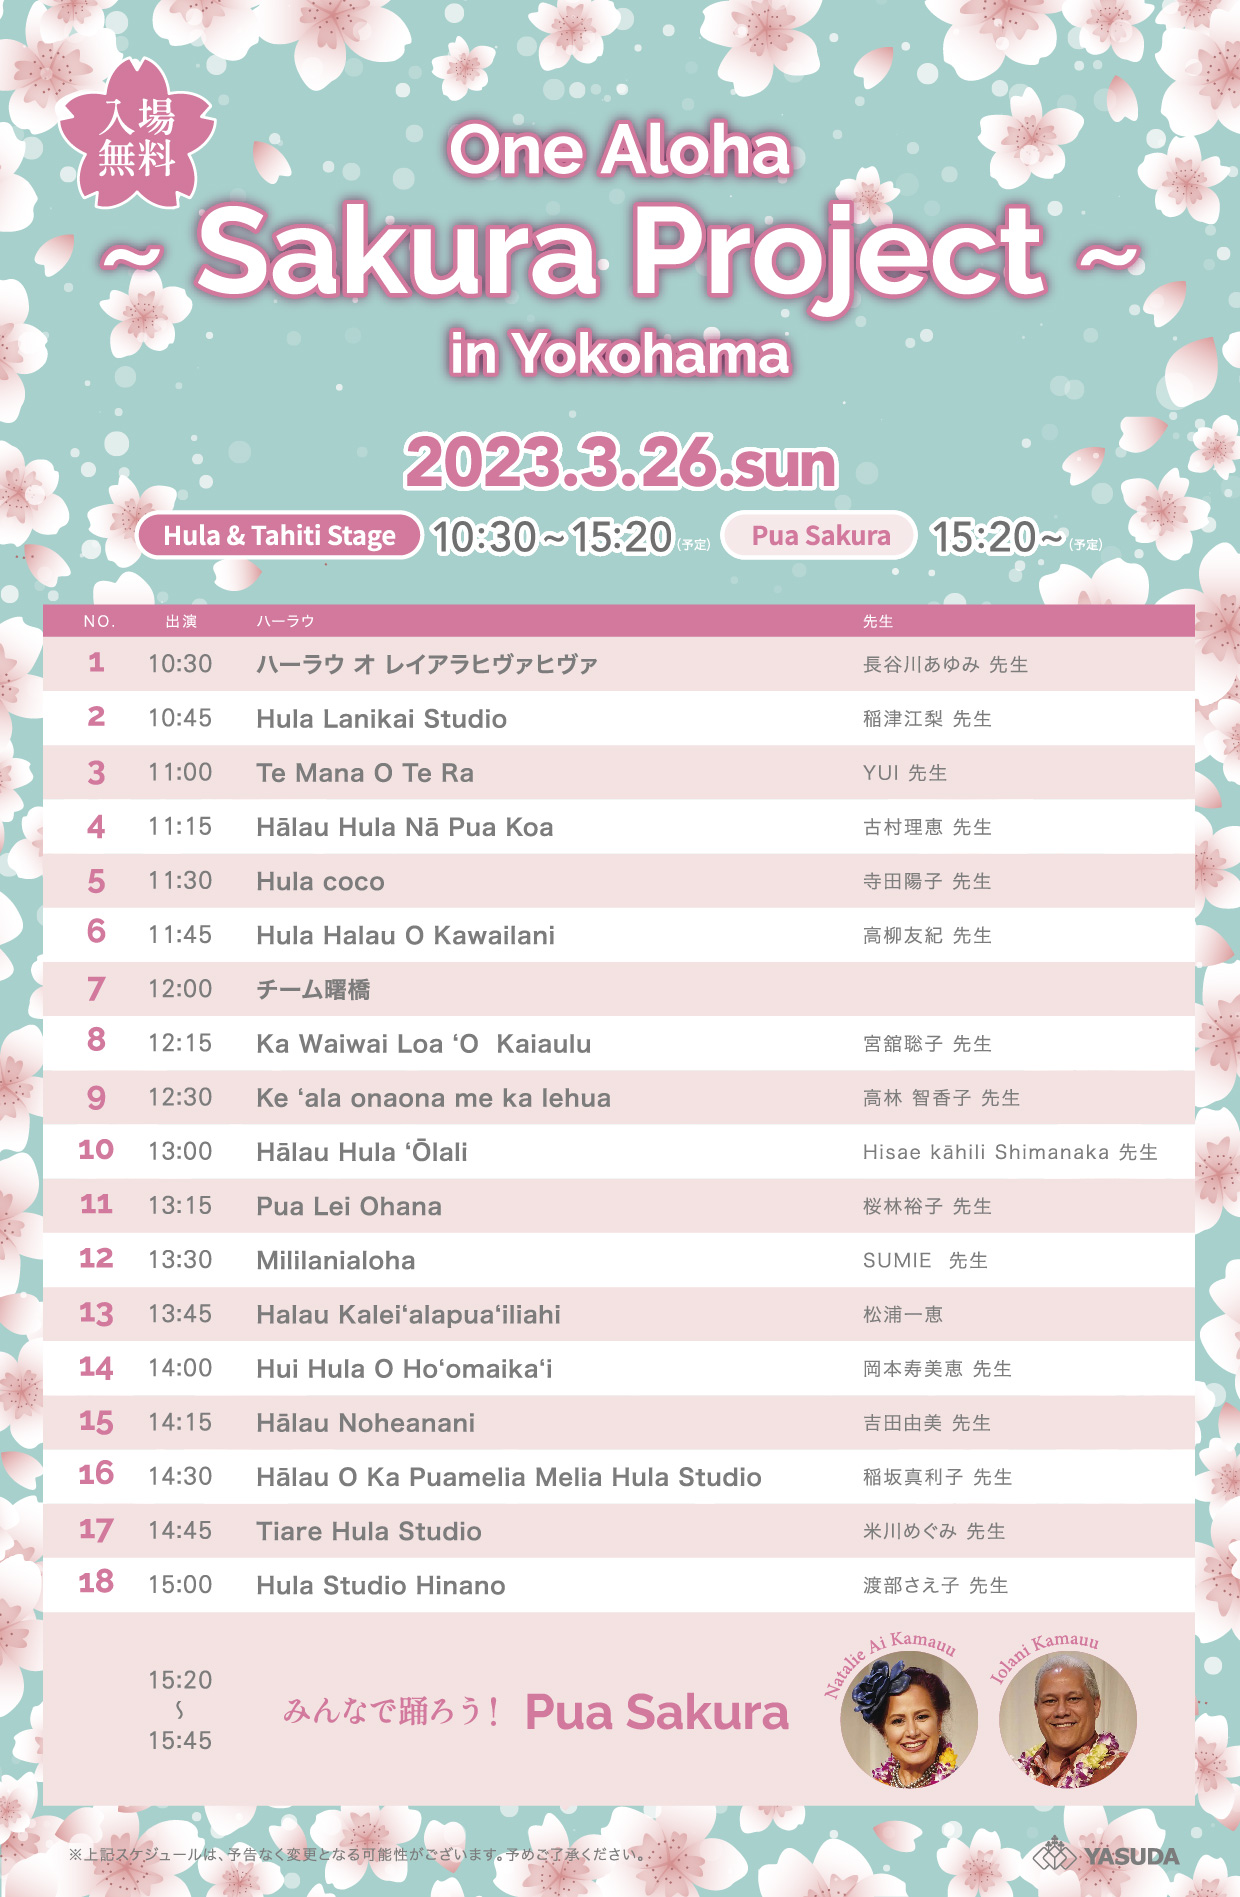 One Aloha Sakura Project in Yokohama 2023.3.26.sun